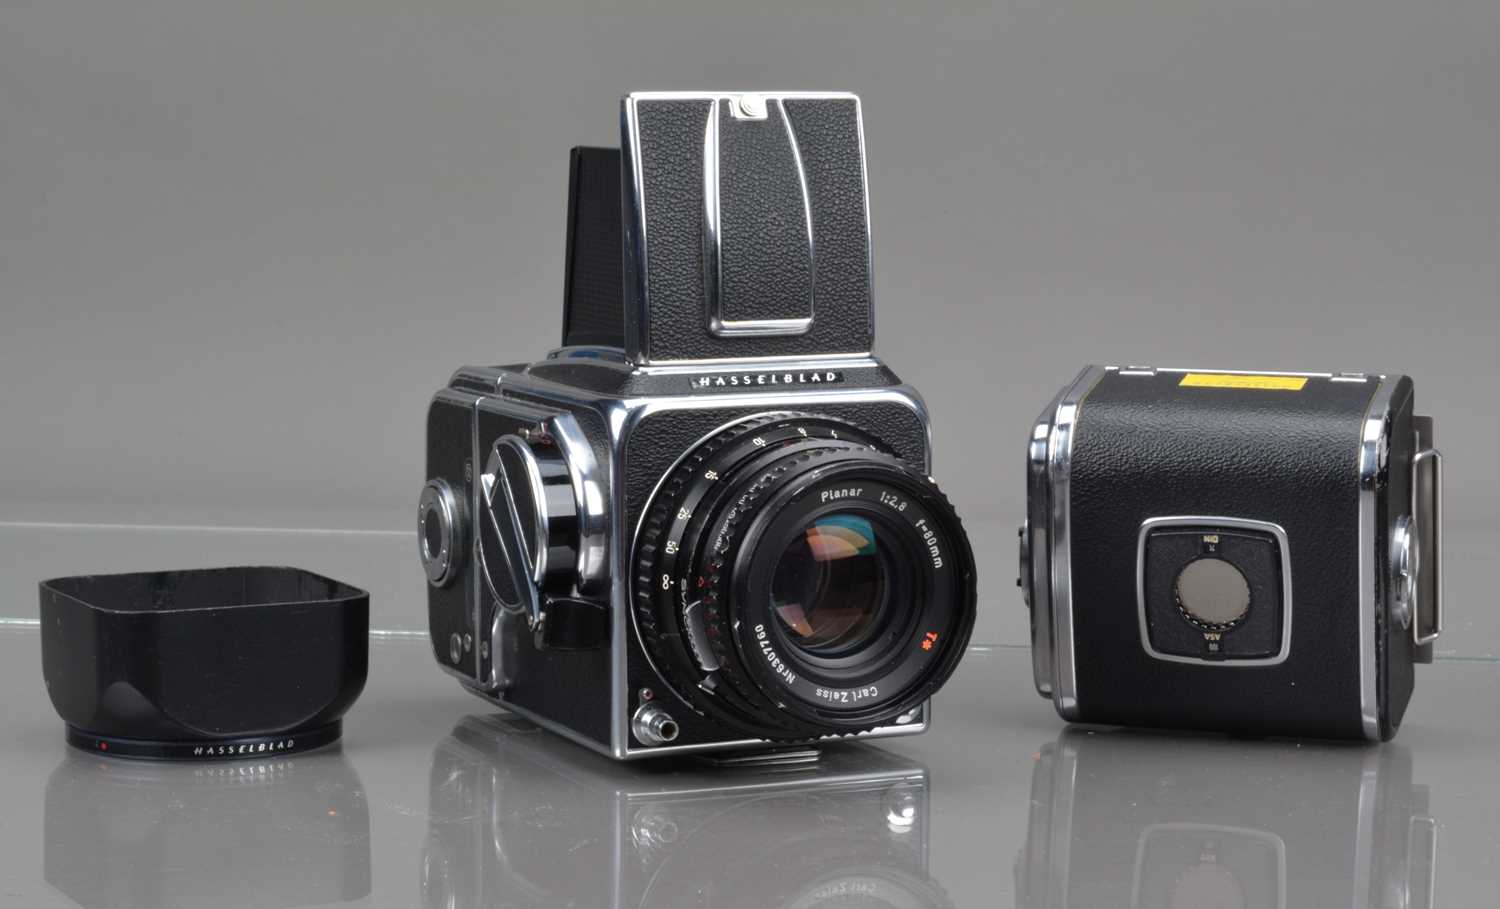 A Hasselblad 500C Camera,